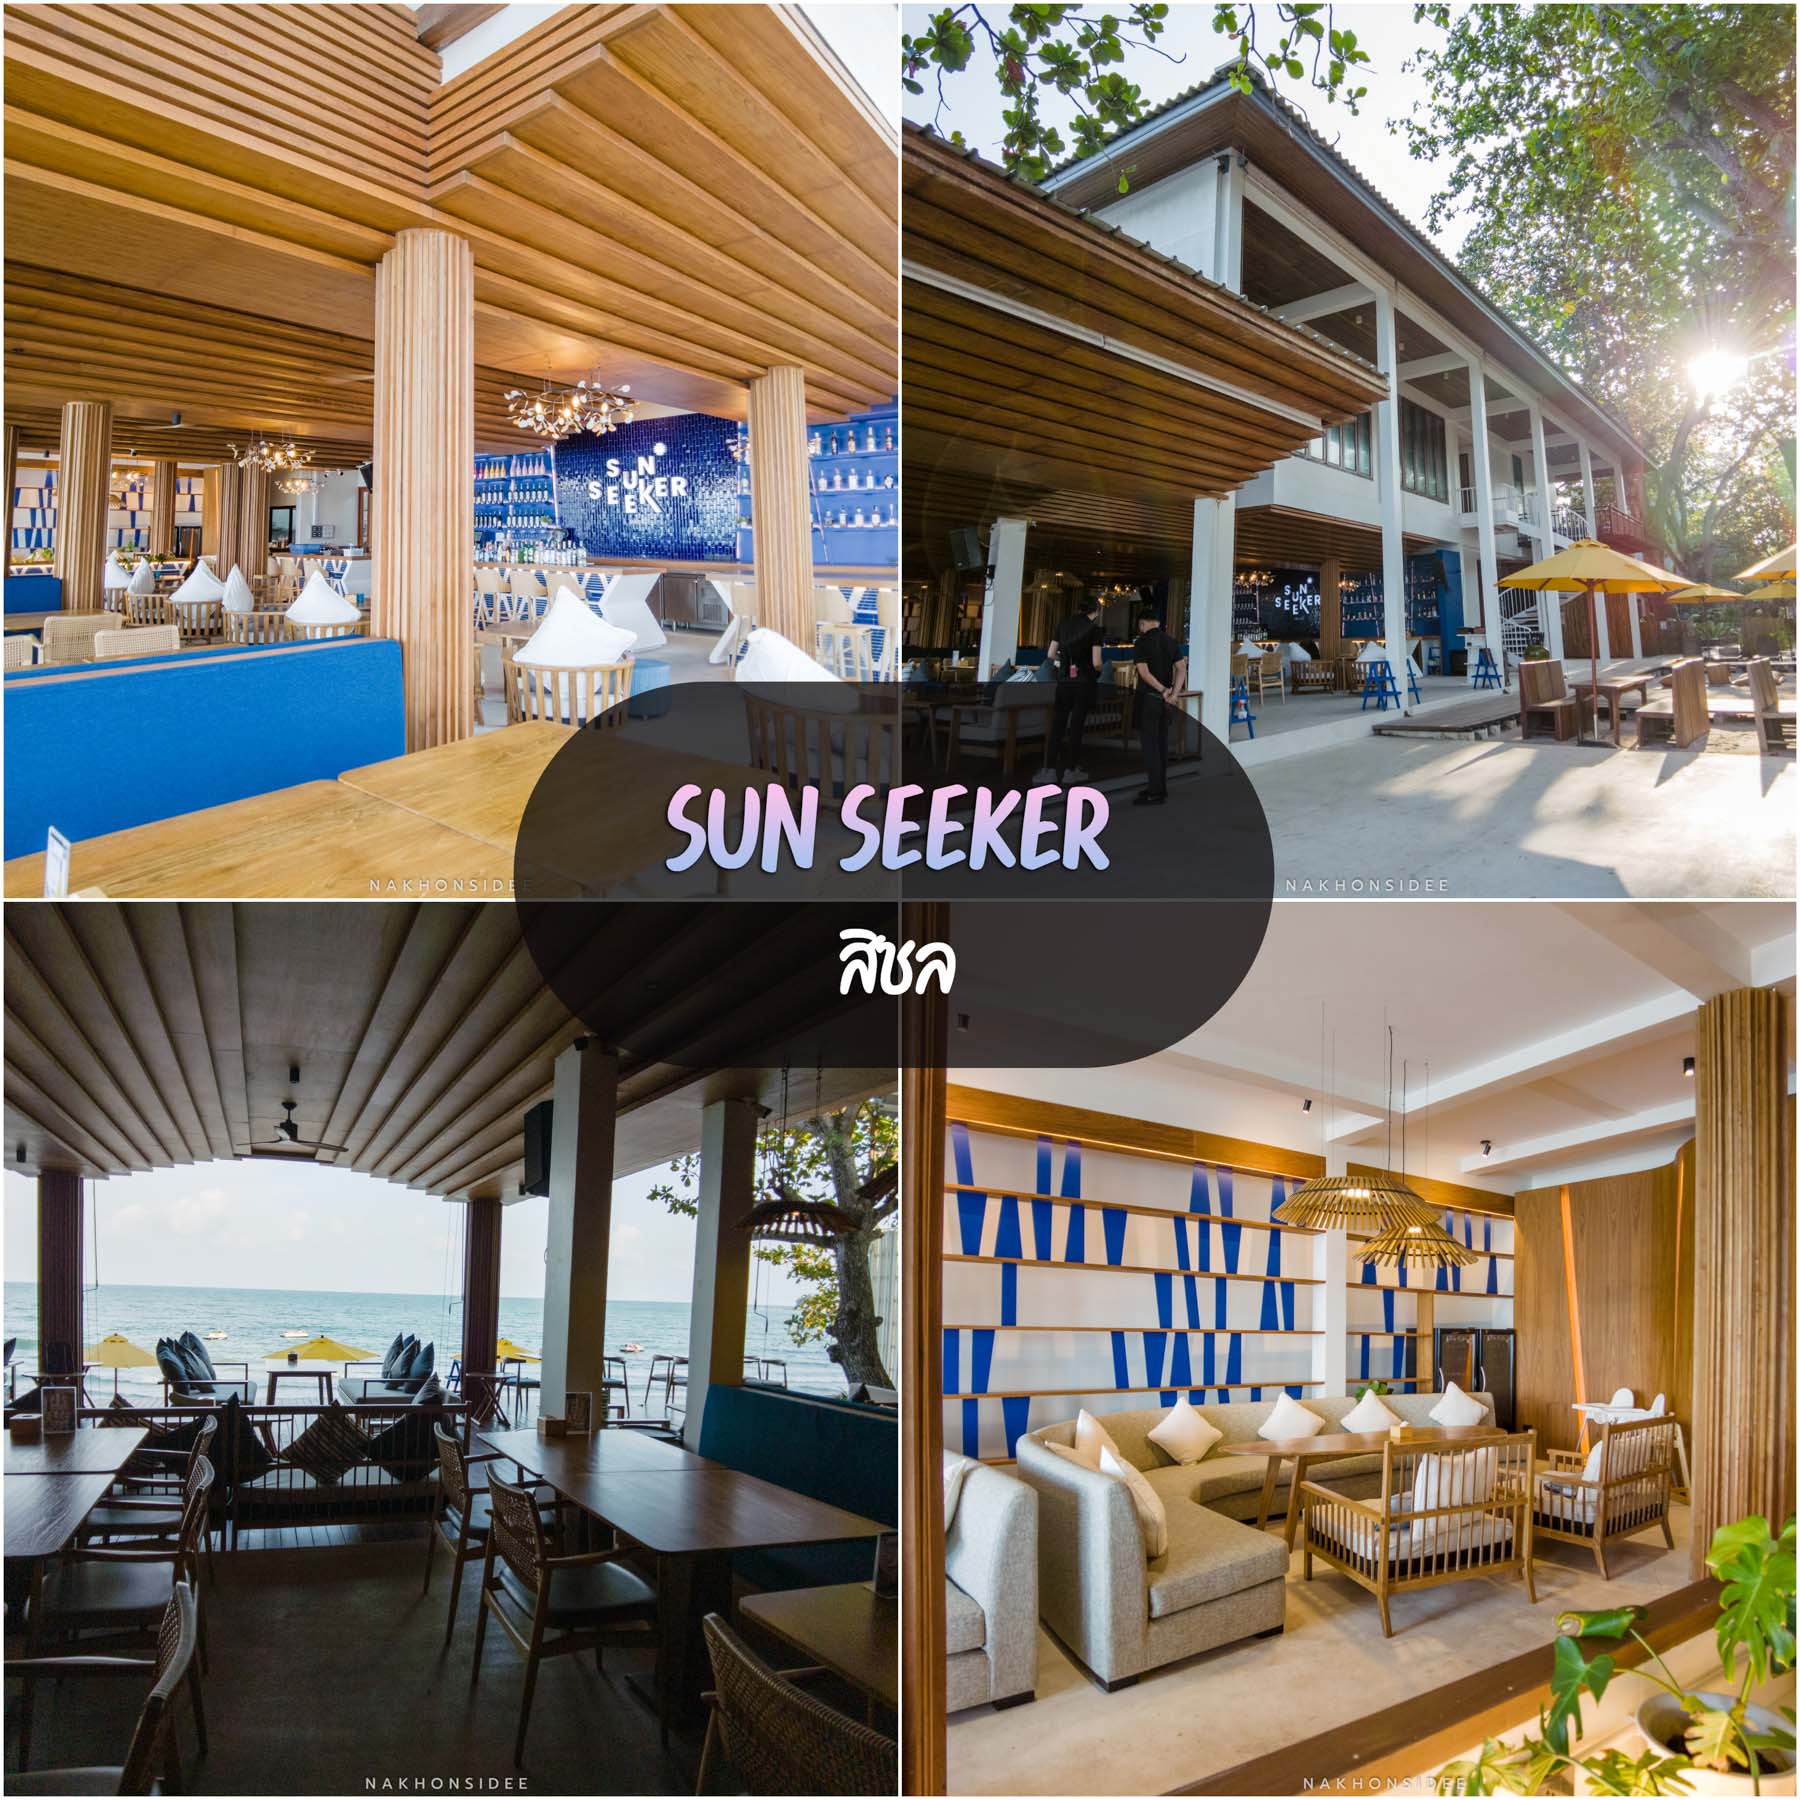 Sun-Seeker ร้านอาหารเปิดใหม่-หน้าโรงแรมสิชลคาบาน่า สิชล,ขนอม,ที่พัก,ของกิน,โรงแรม,ที่เที่ยว,จุดเช็คอิน,วัดเจดีย์,ตาไข่